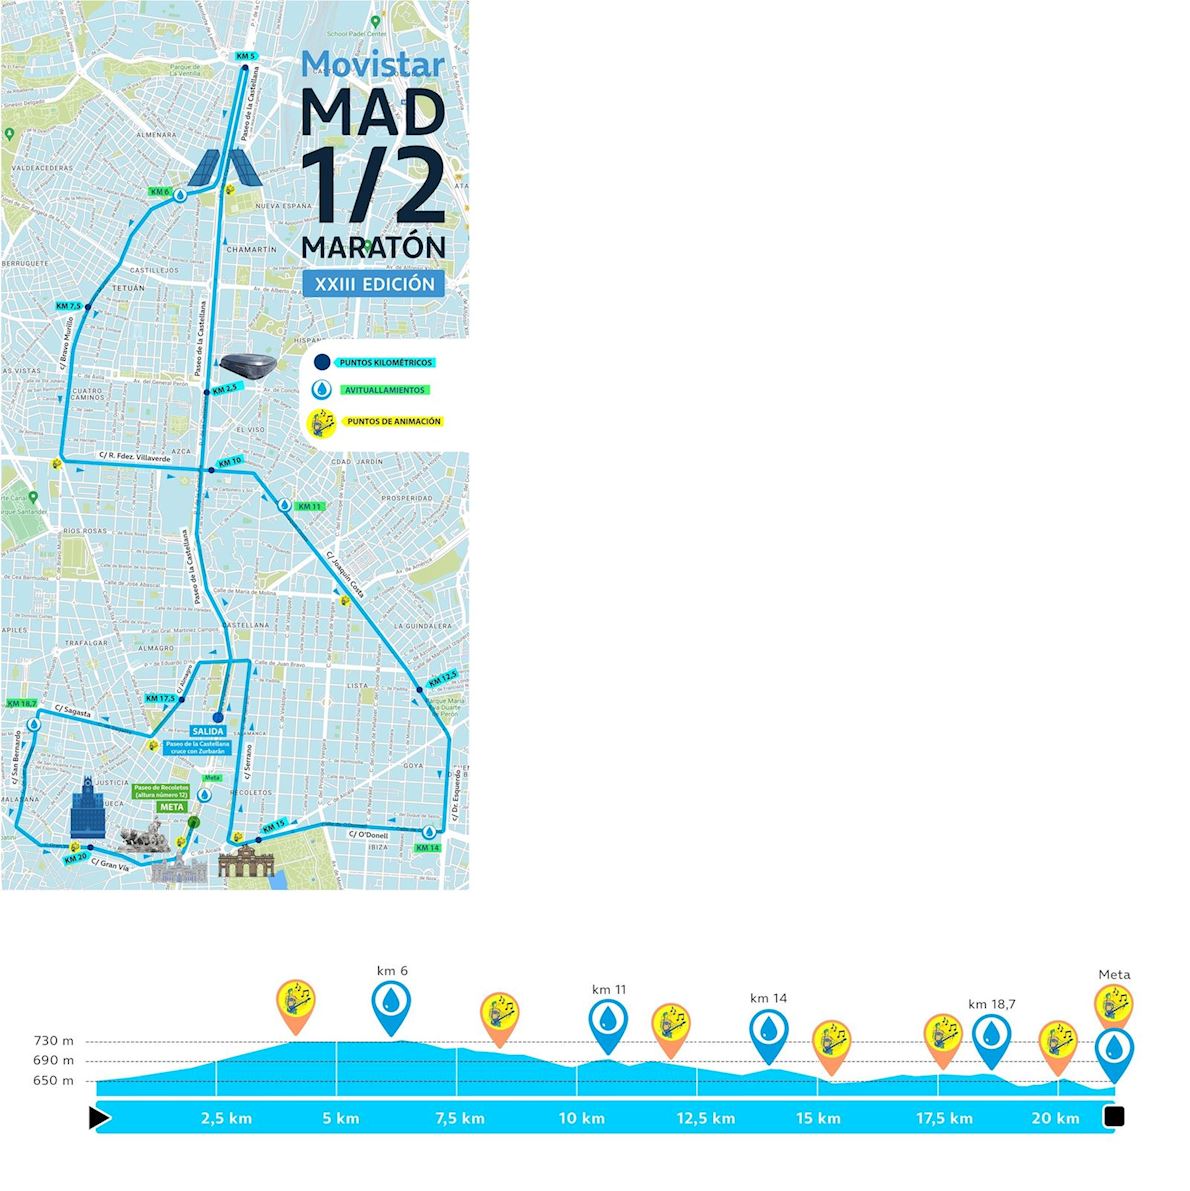 Movistar Madrid Medio Maratón Route Map